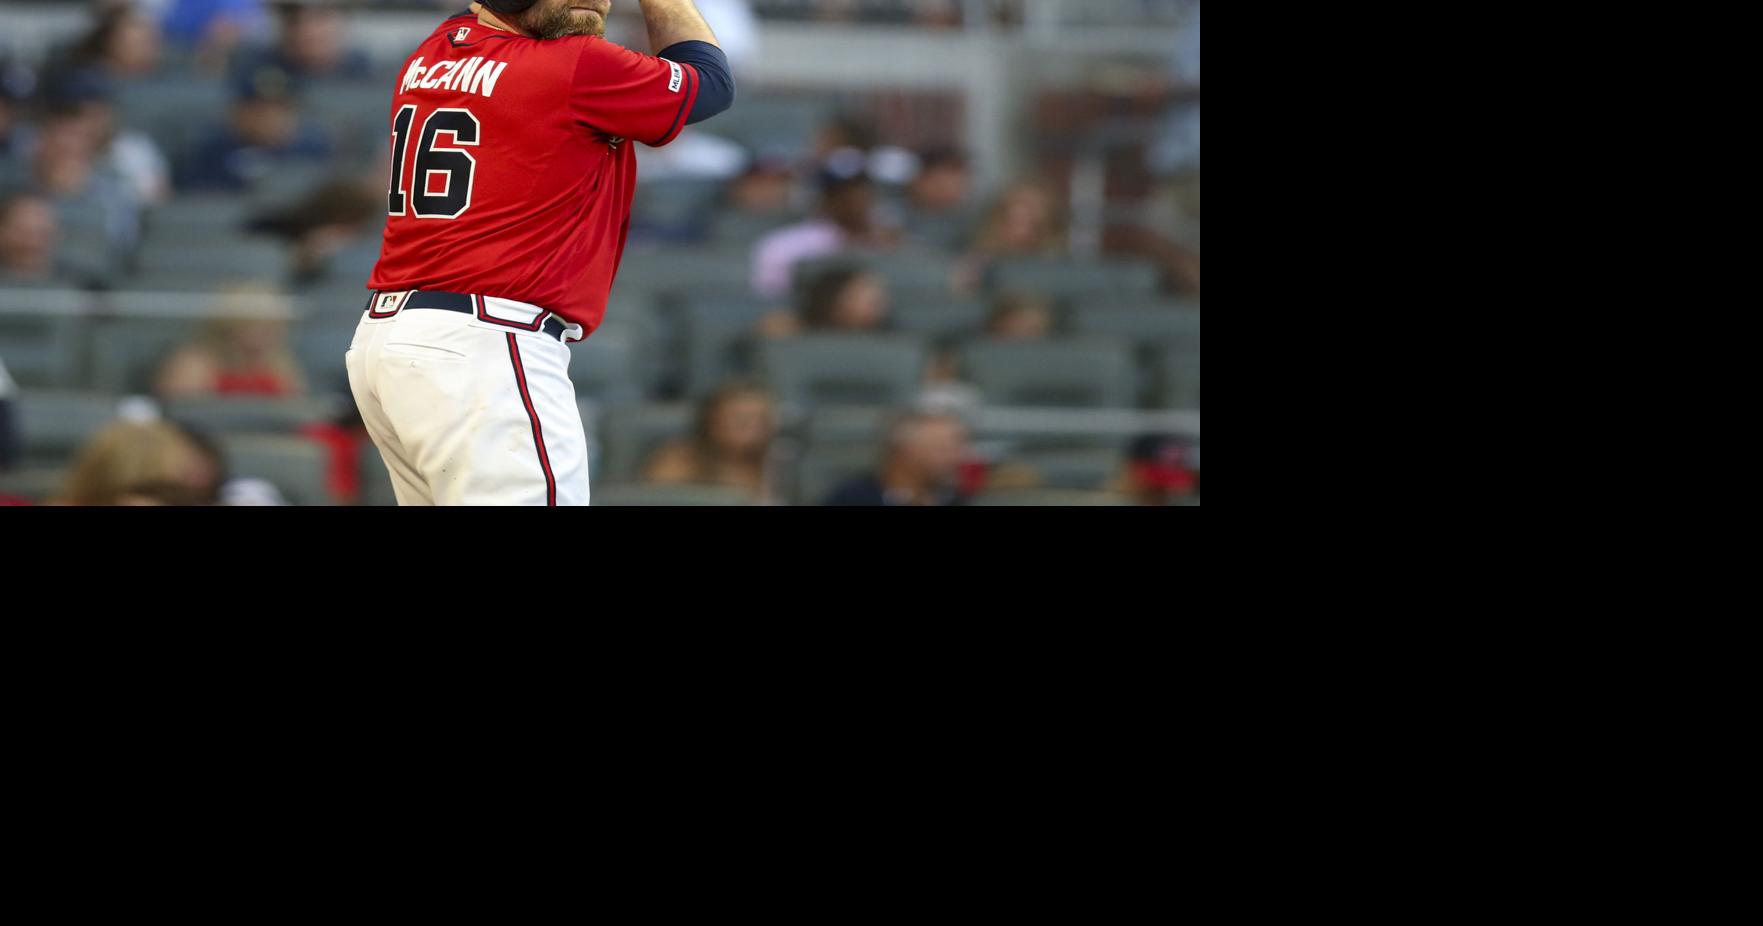 Gwinnett native, Braves catcher Brian McCann retires after 15 MLB seasons, Sports